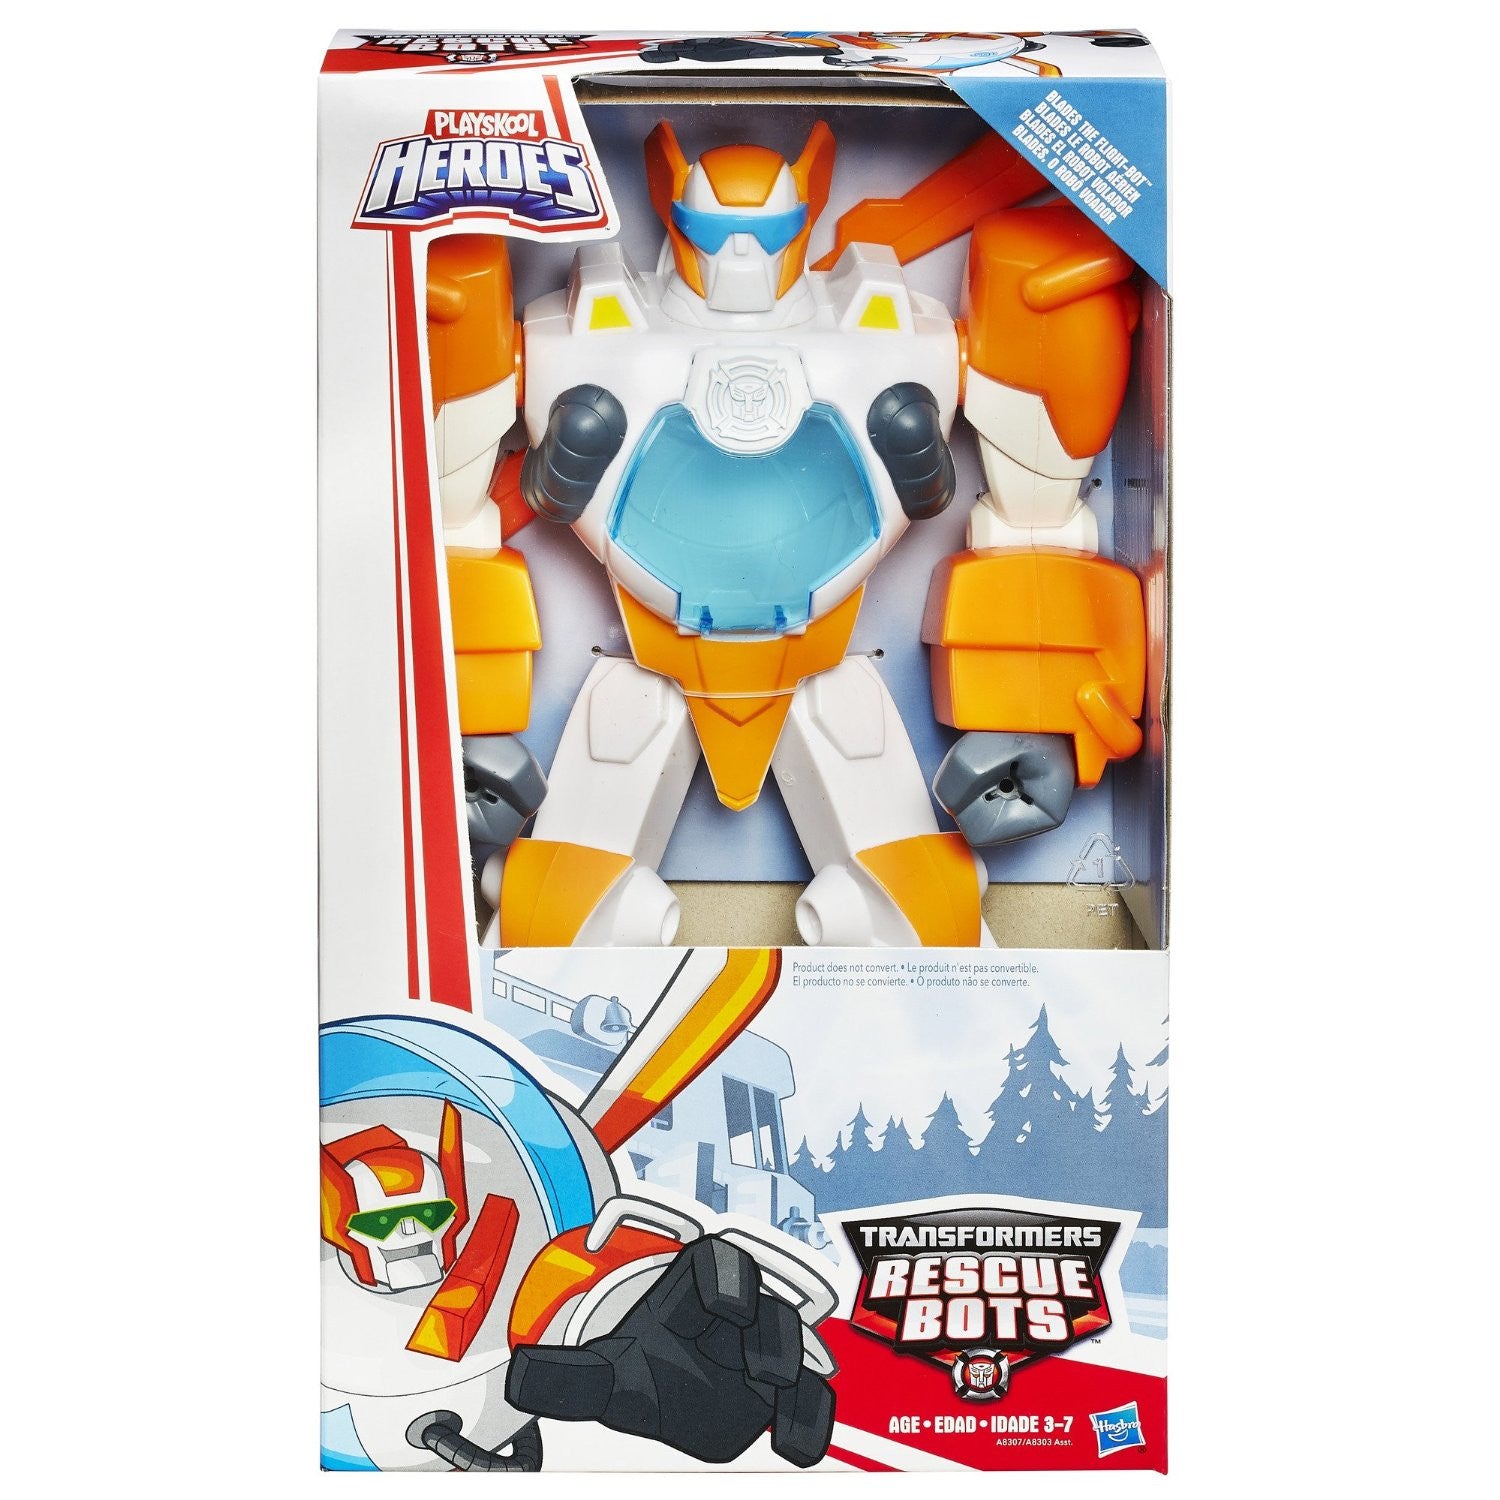 Playskool Transformers Rescue Bots Blades the Flight-Bot Figure